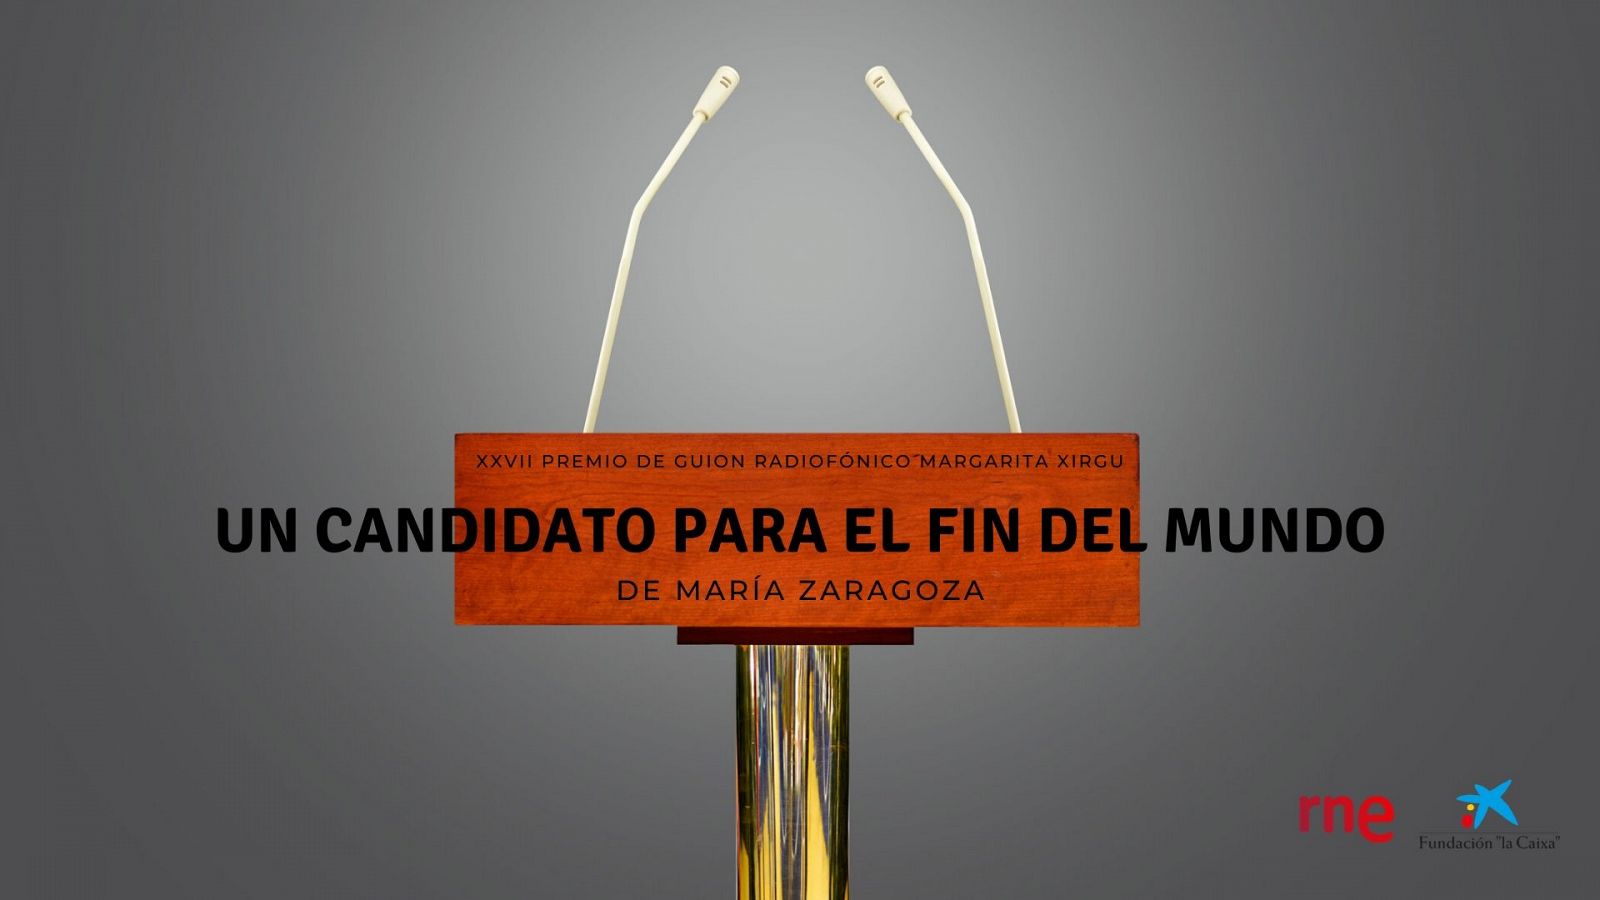 Vuelve a escuchar 'Un candidato para el fin del mundo', XXVII Premio de Guion Radiofnico Margarita Xirgu